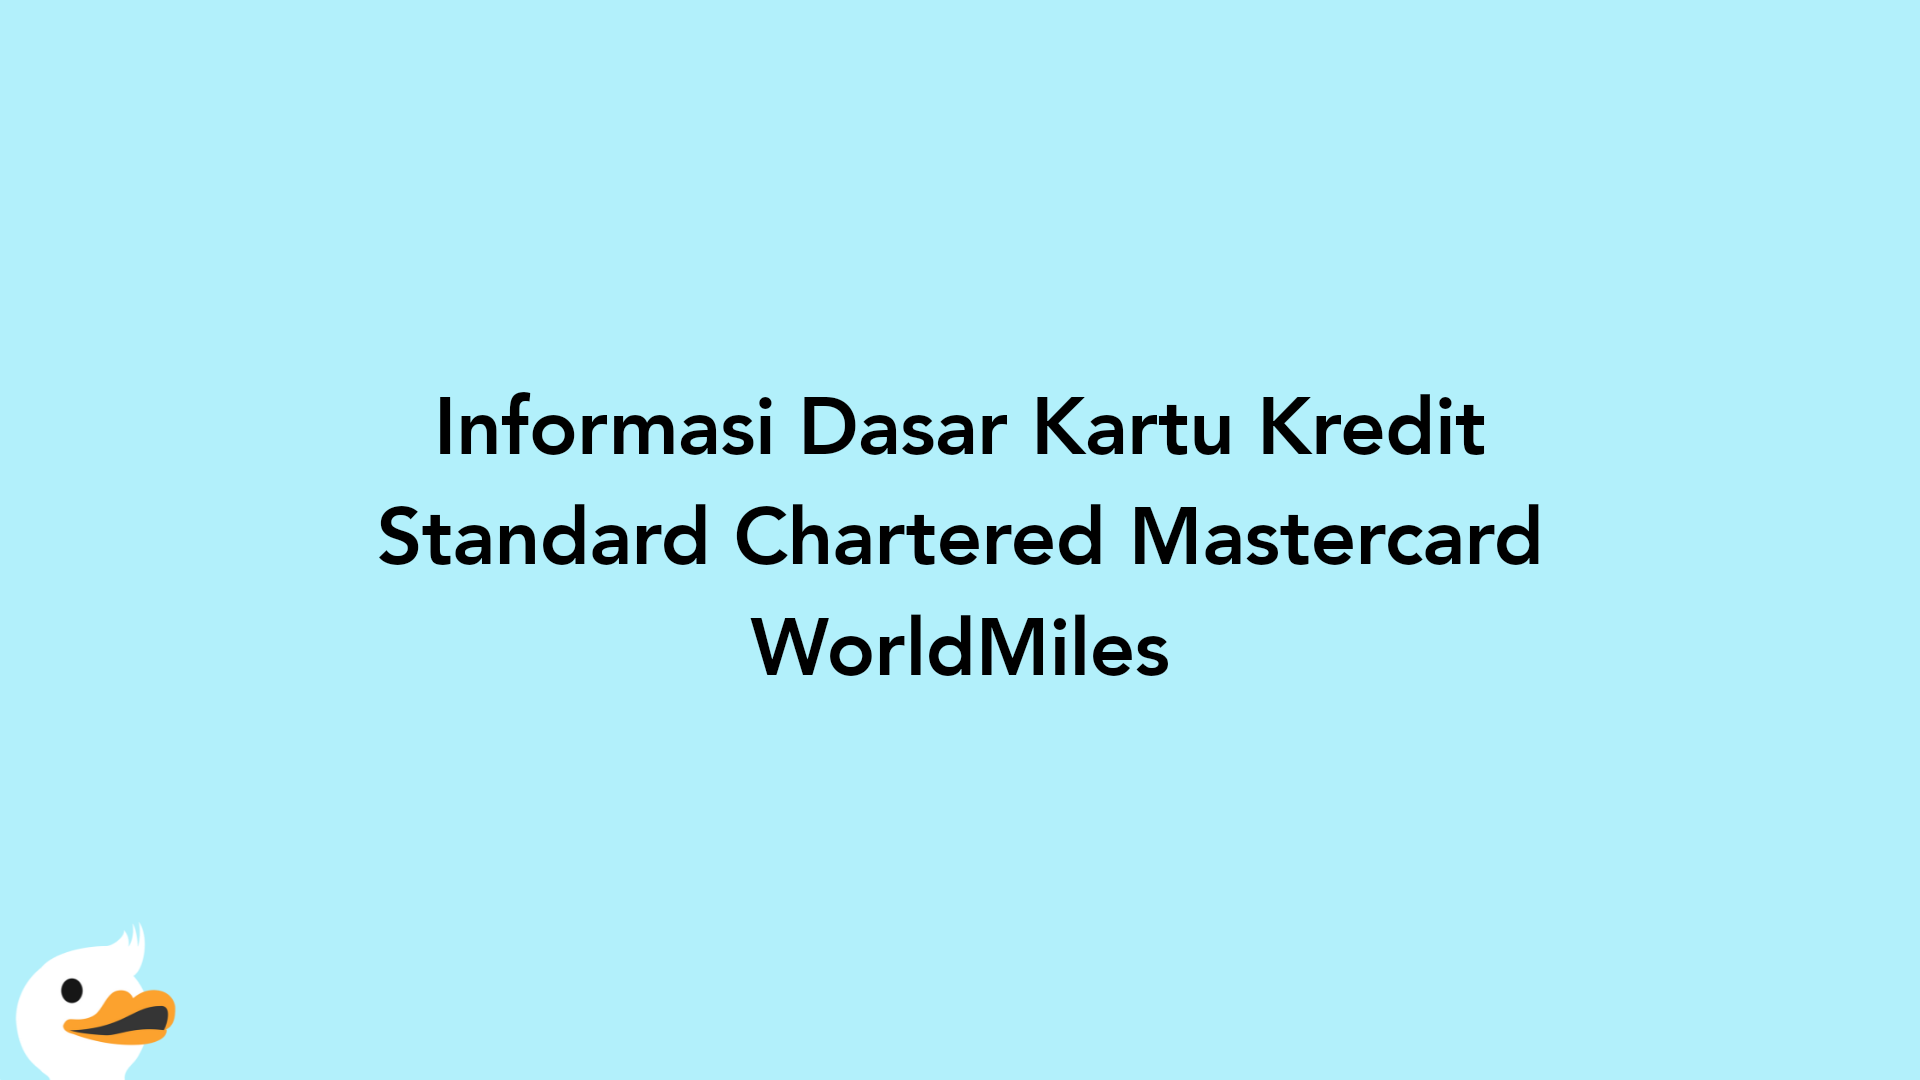 Informasi Dasar Kartu Kredit Standard Chartered Mastercard WorldMiles